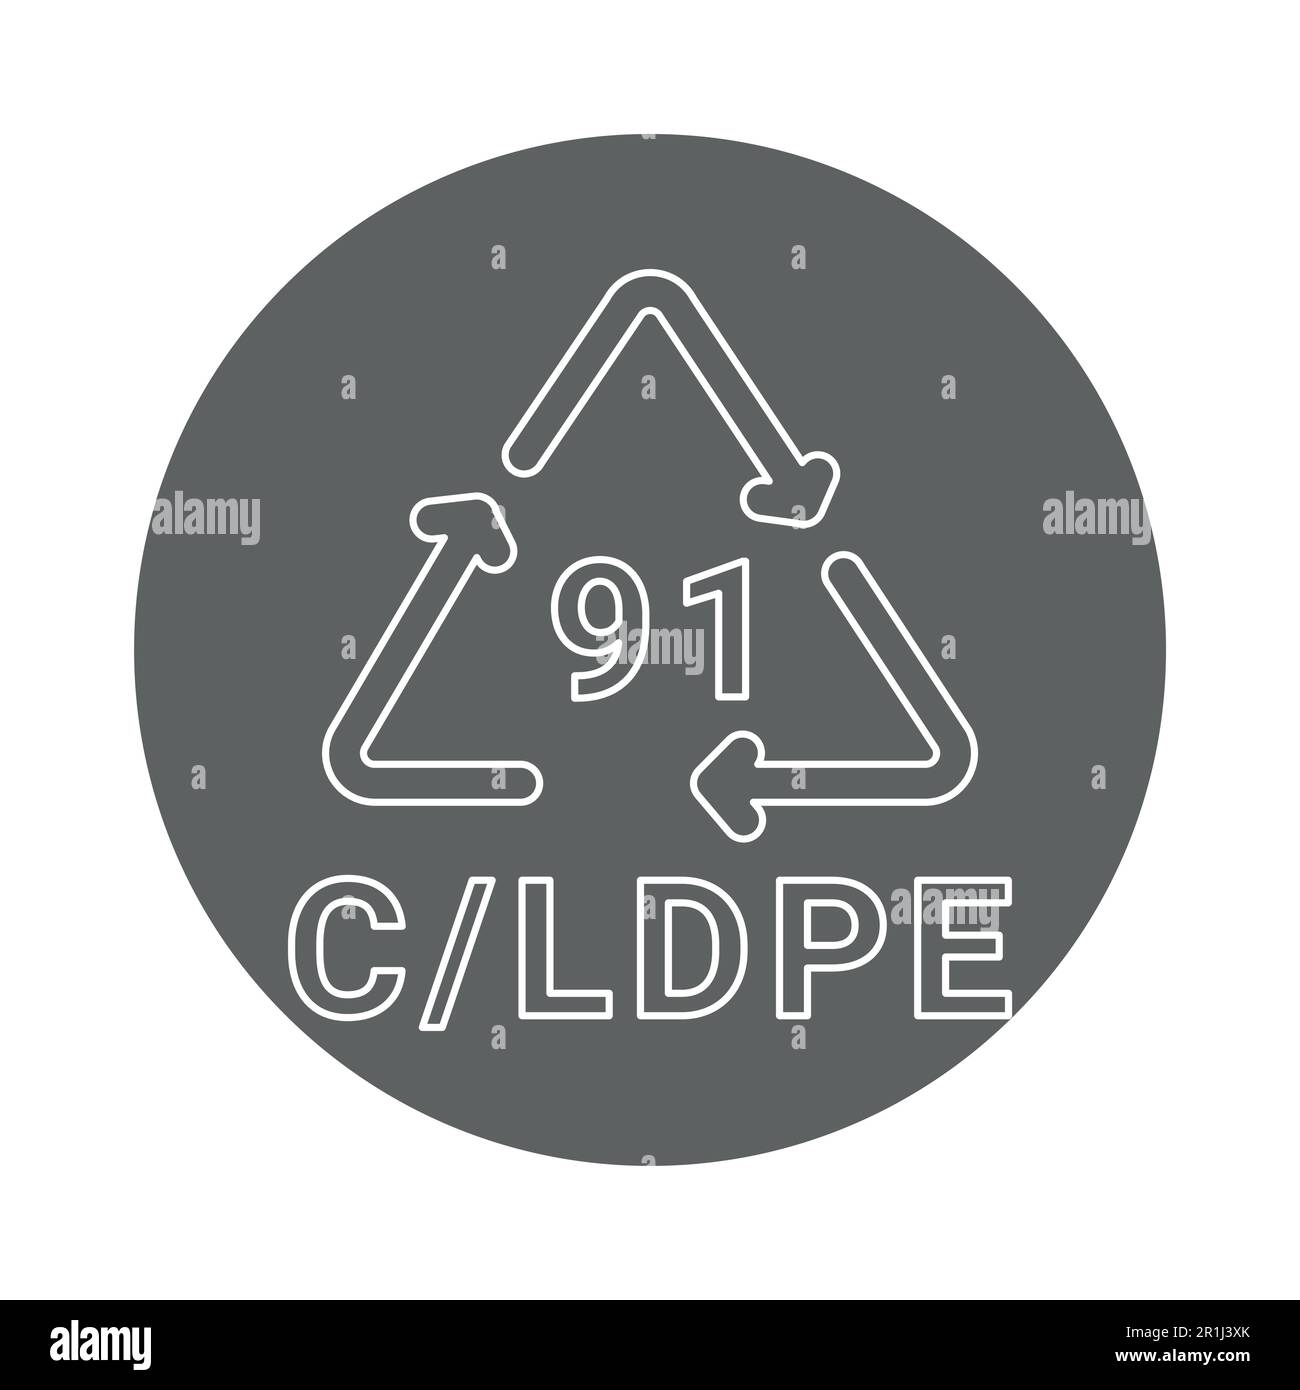 Composites recycling C/LDPE 91 line icon. Consumption code. Editable stroke. Stock Vector